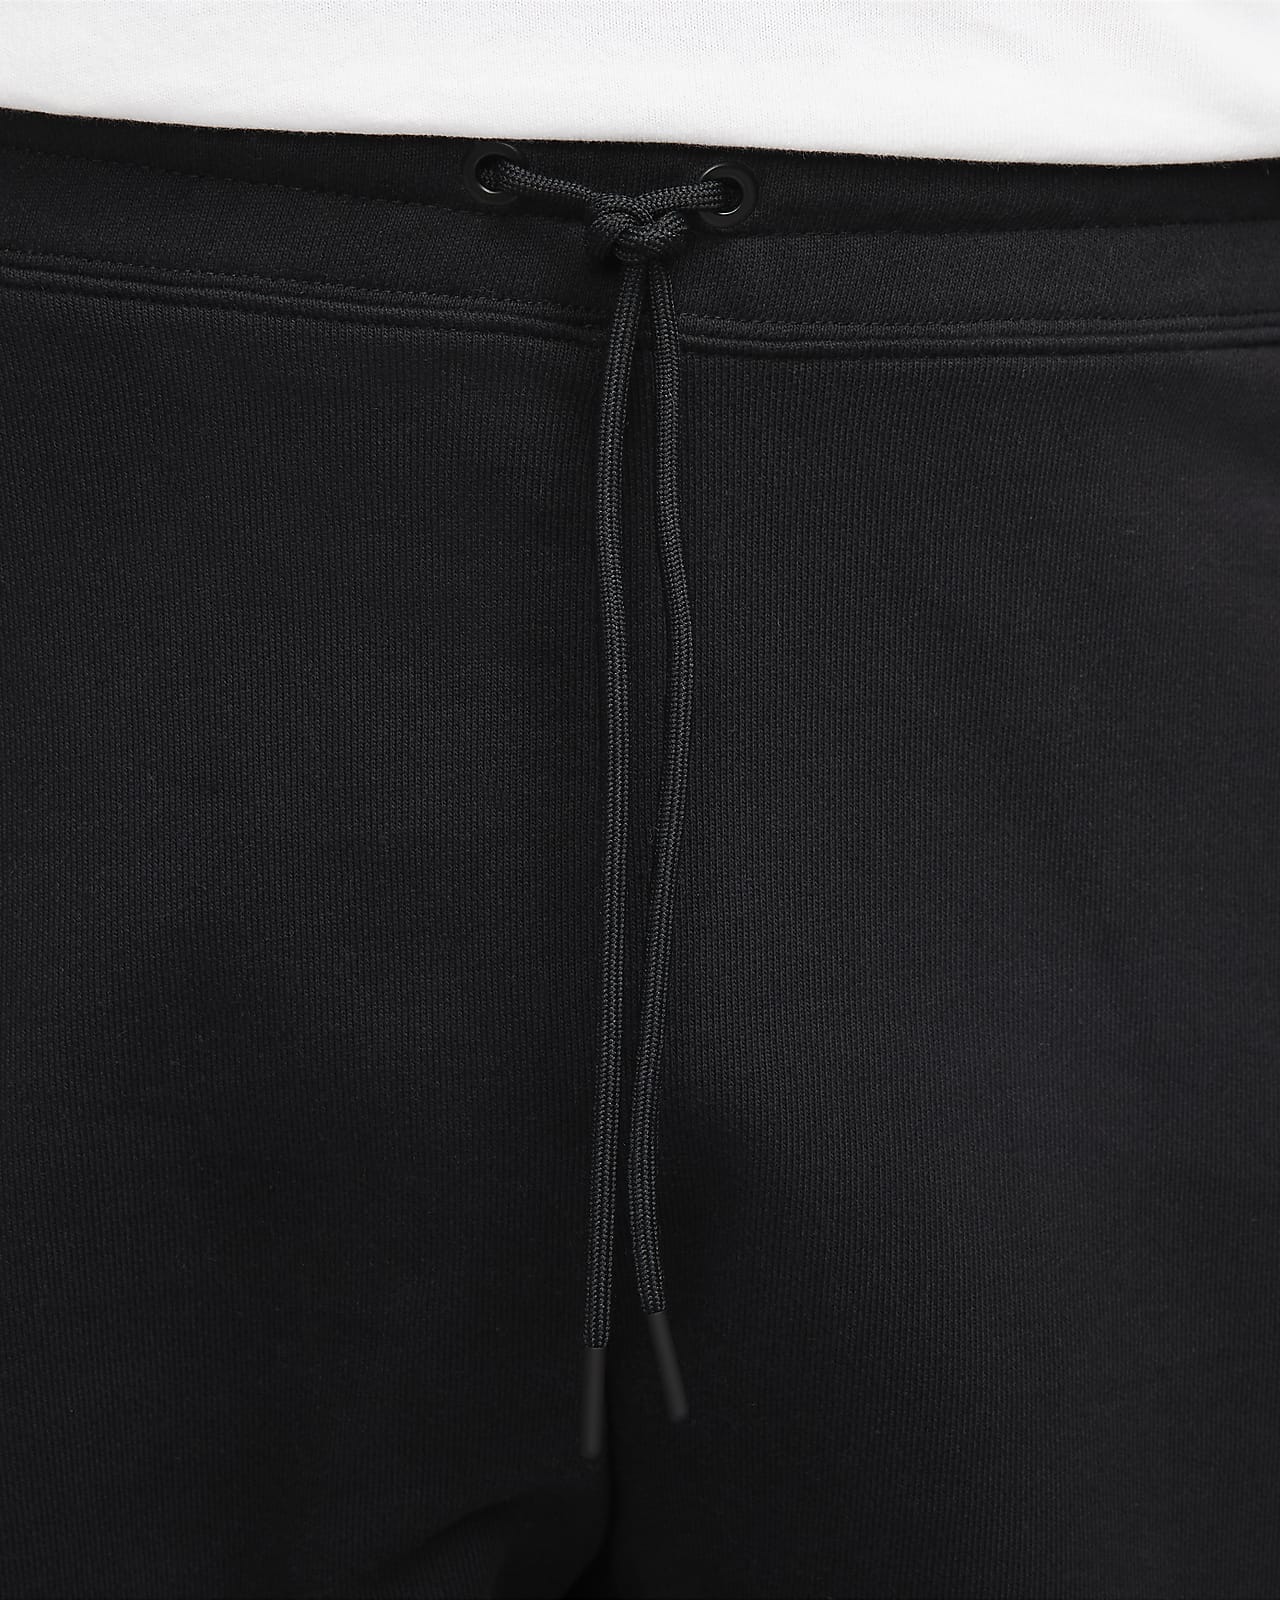 Nike Solo Swoosh Men's Fleece Pants, Black/White, Medium 